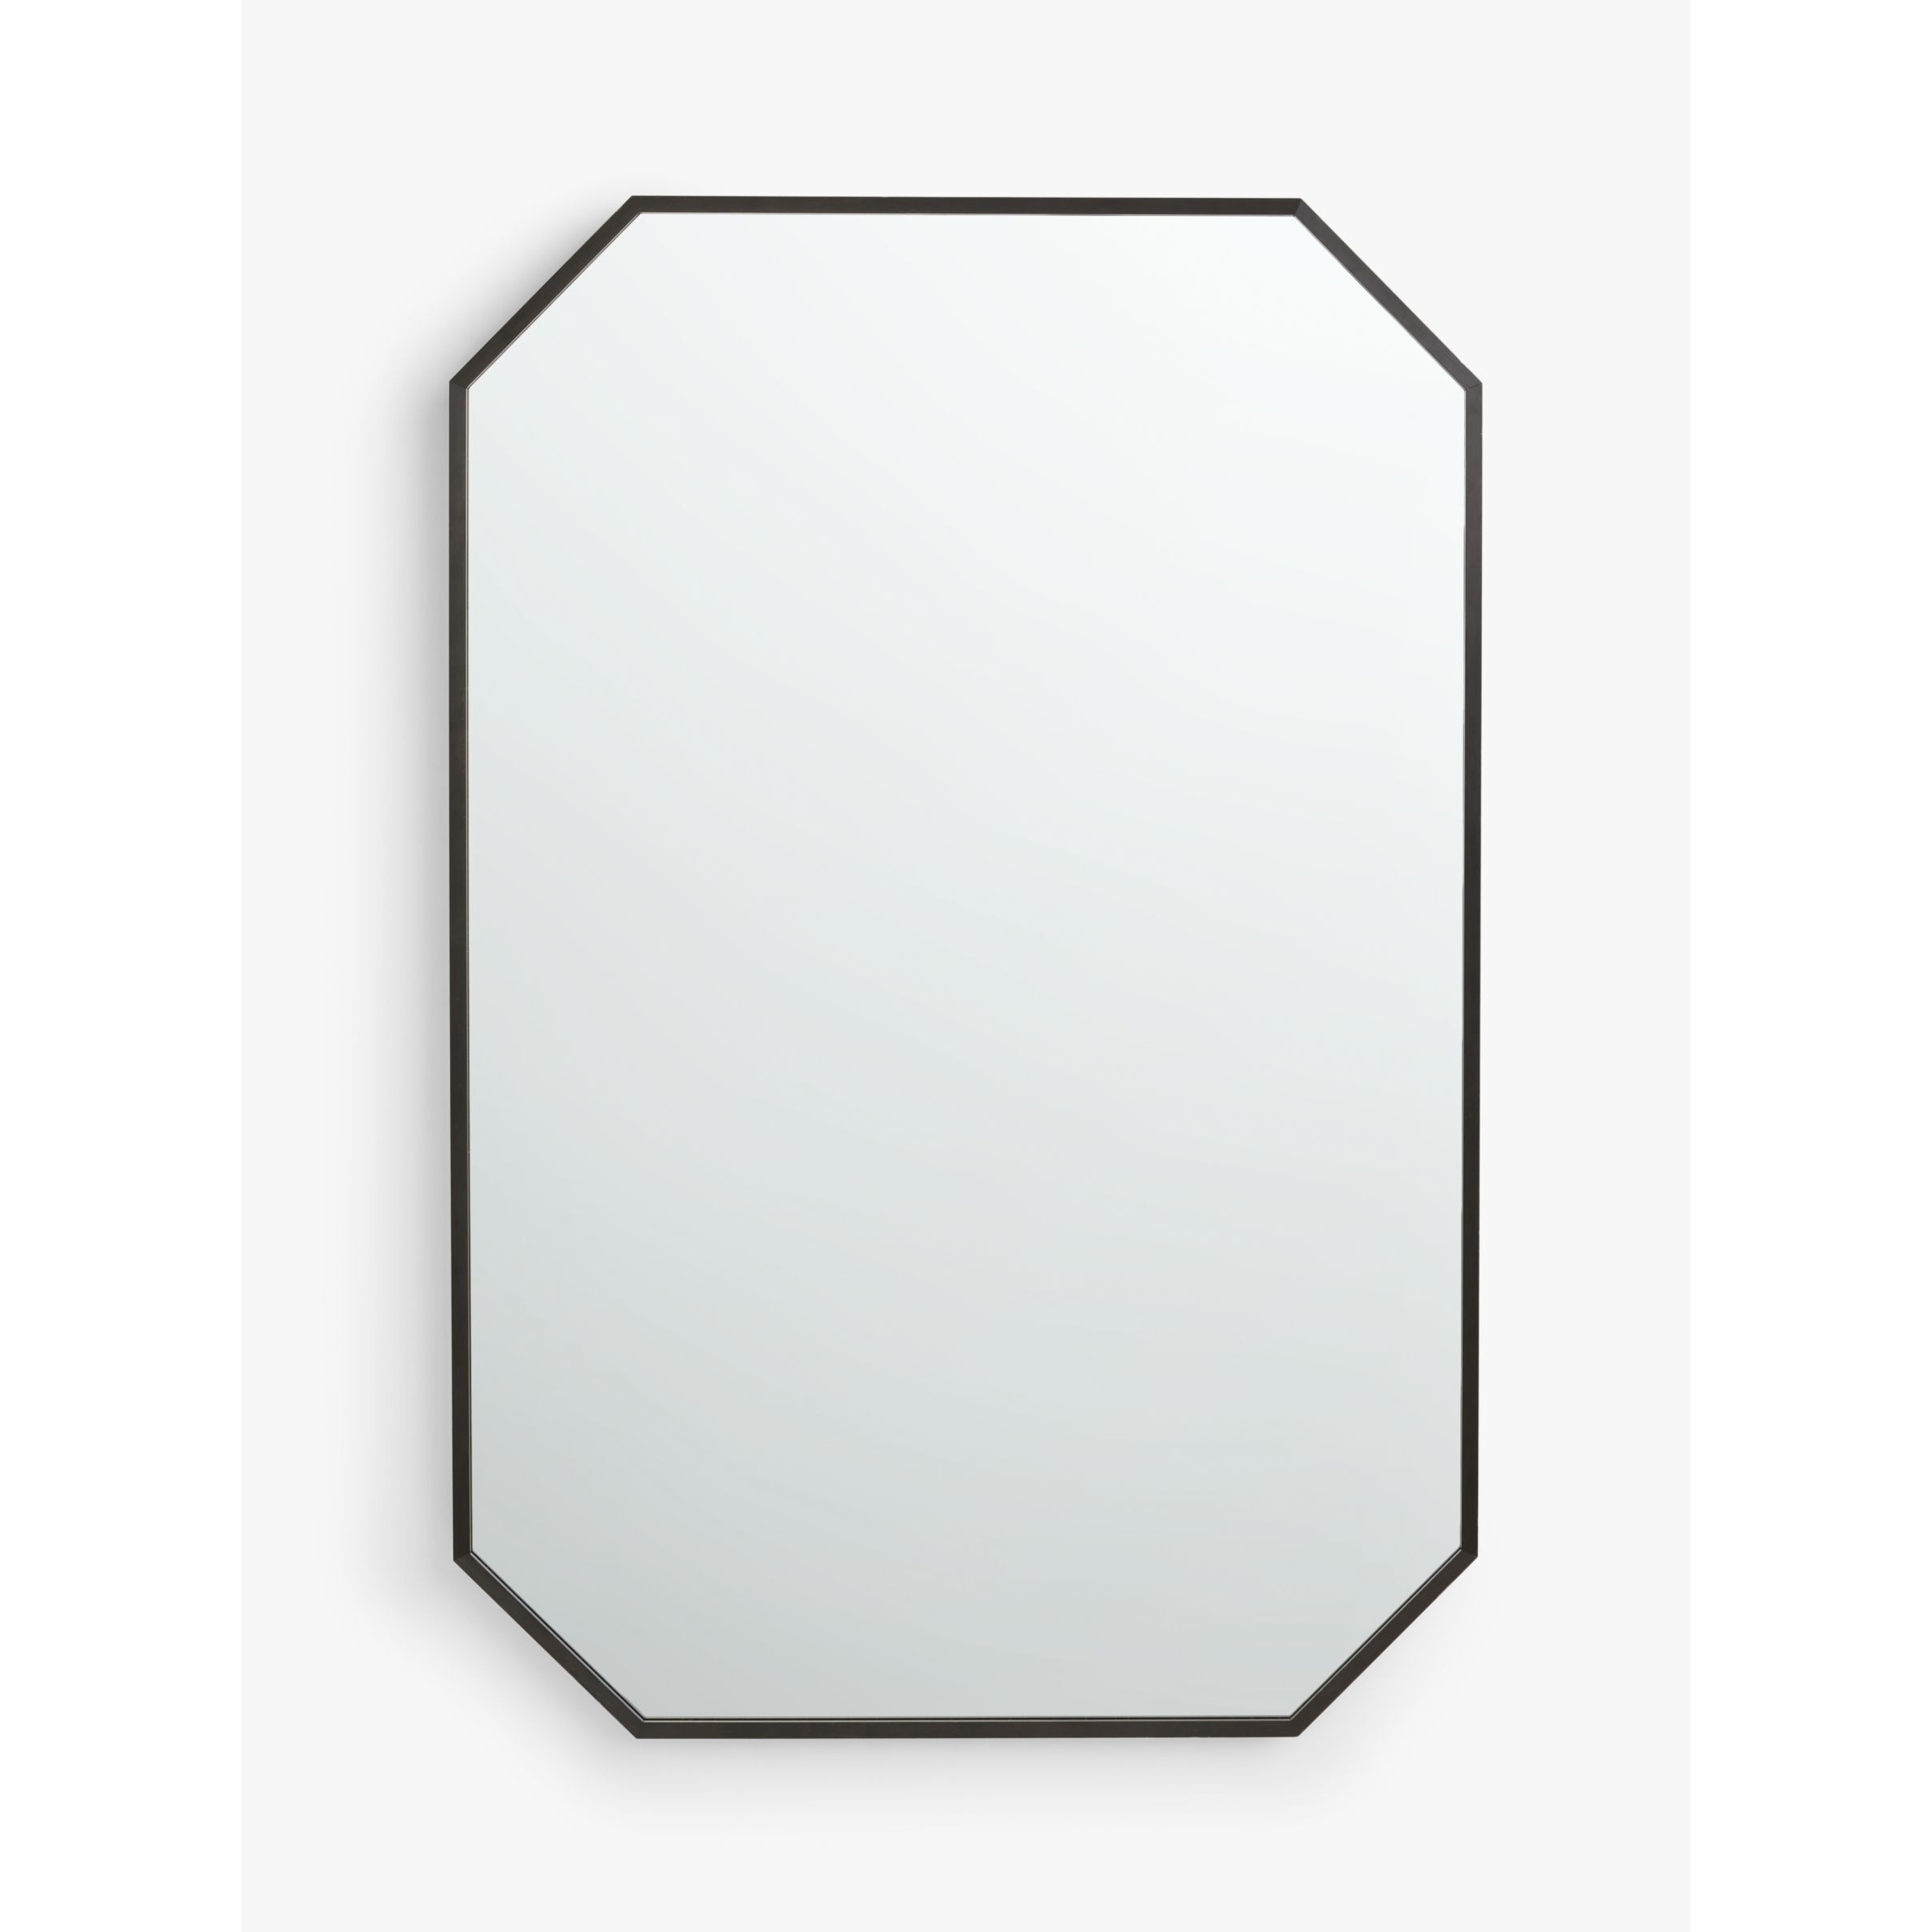 John Lewis Angled Corner Metal Frame Wall Mirror, 90 x 60cm, Black - image 1